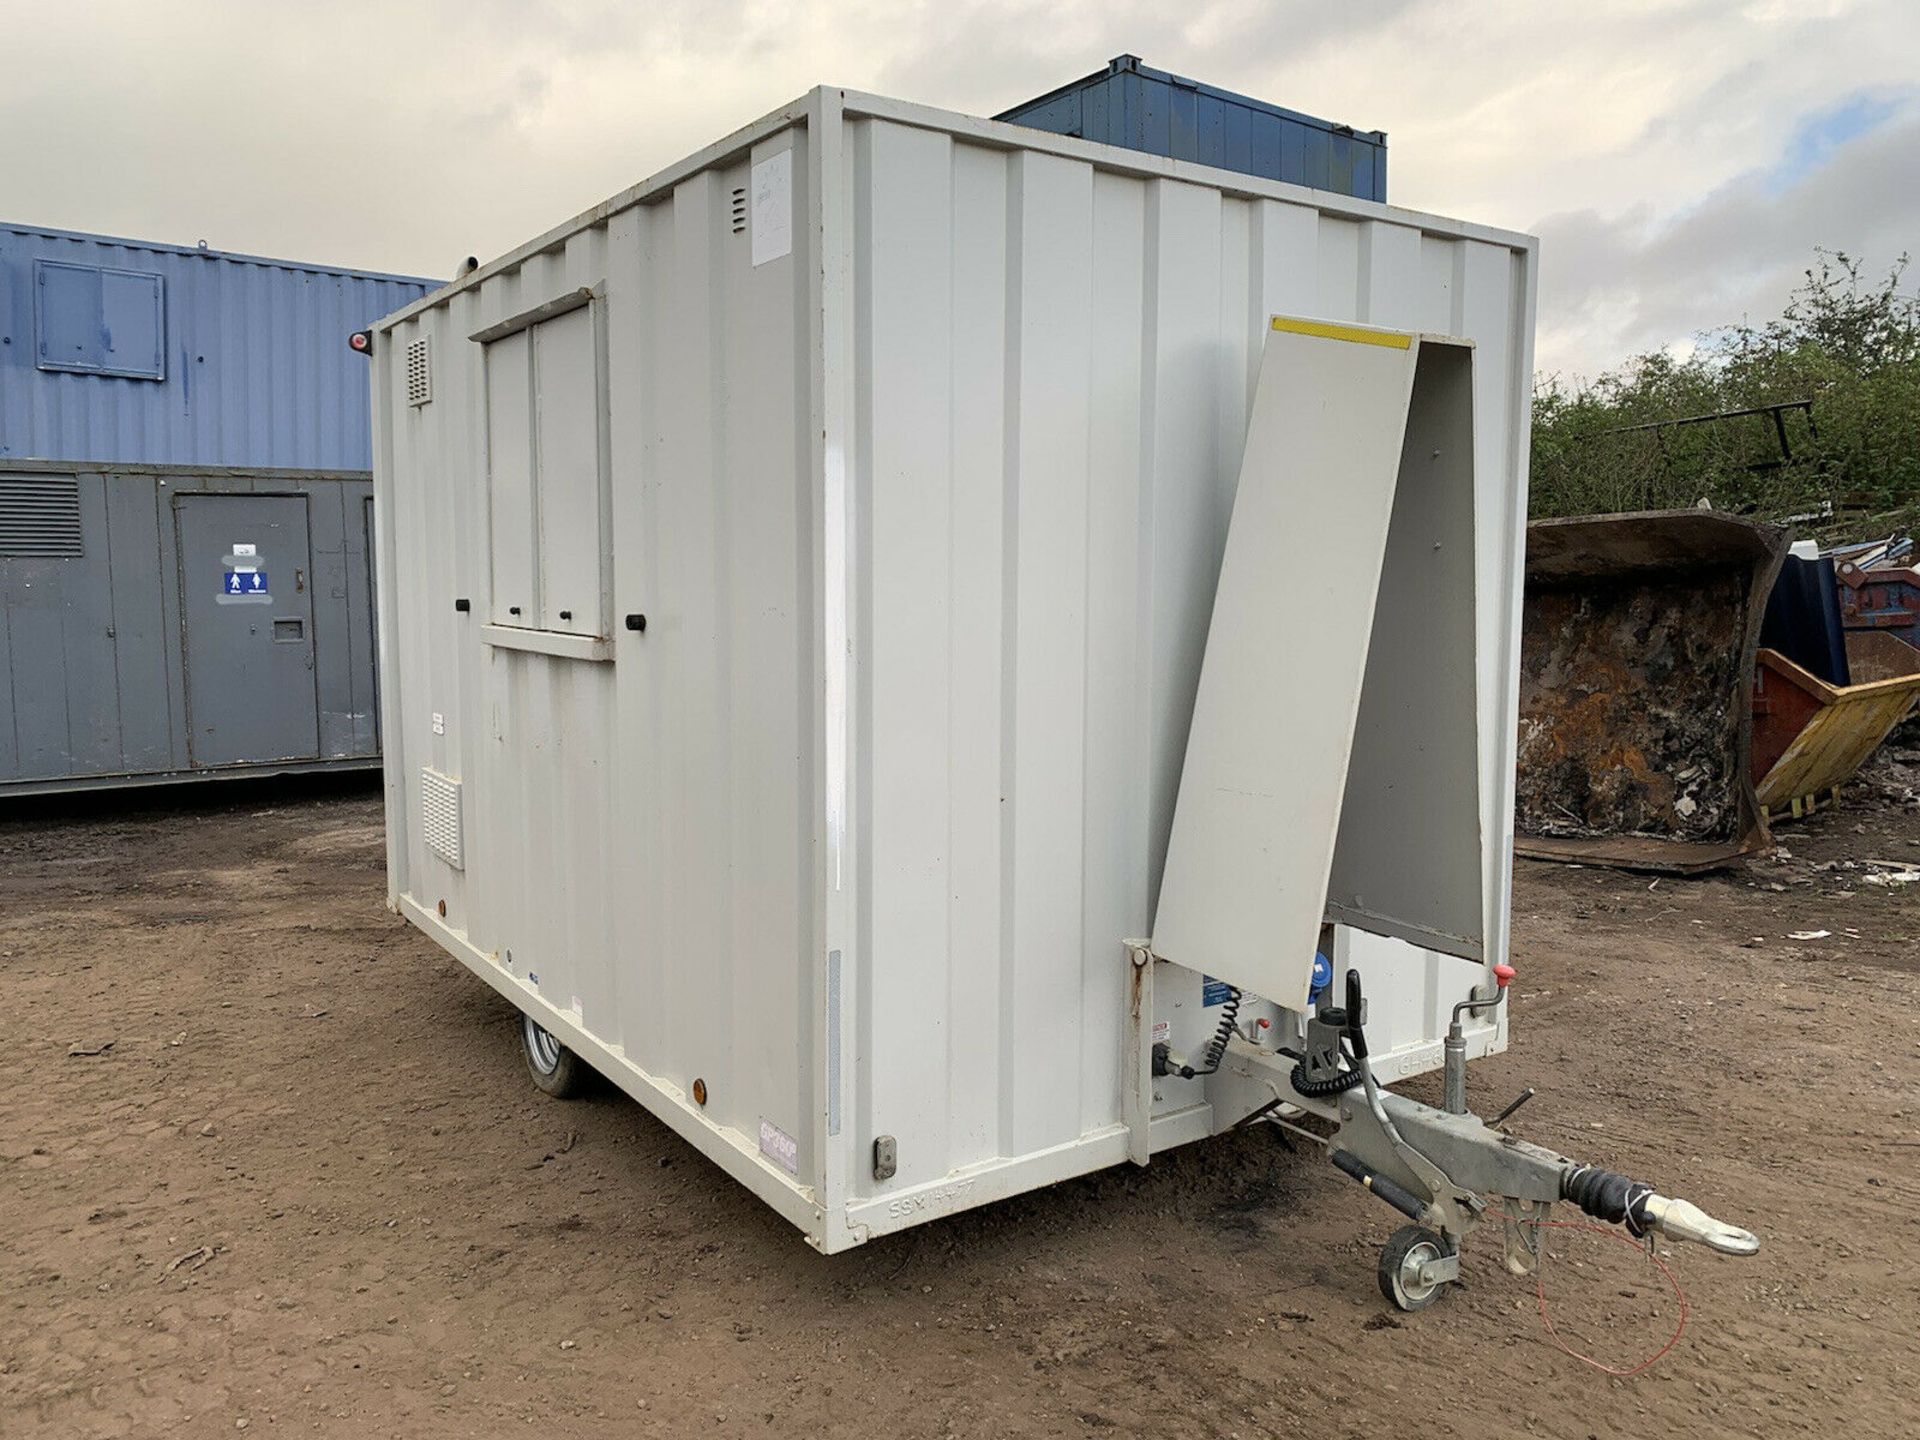 Groundhog GP360 Towable Welfare Unit Site Cabin Canteen Toilet Generator